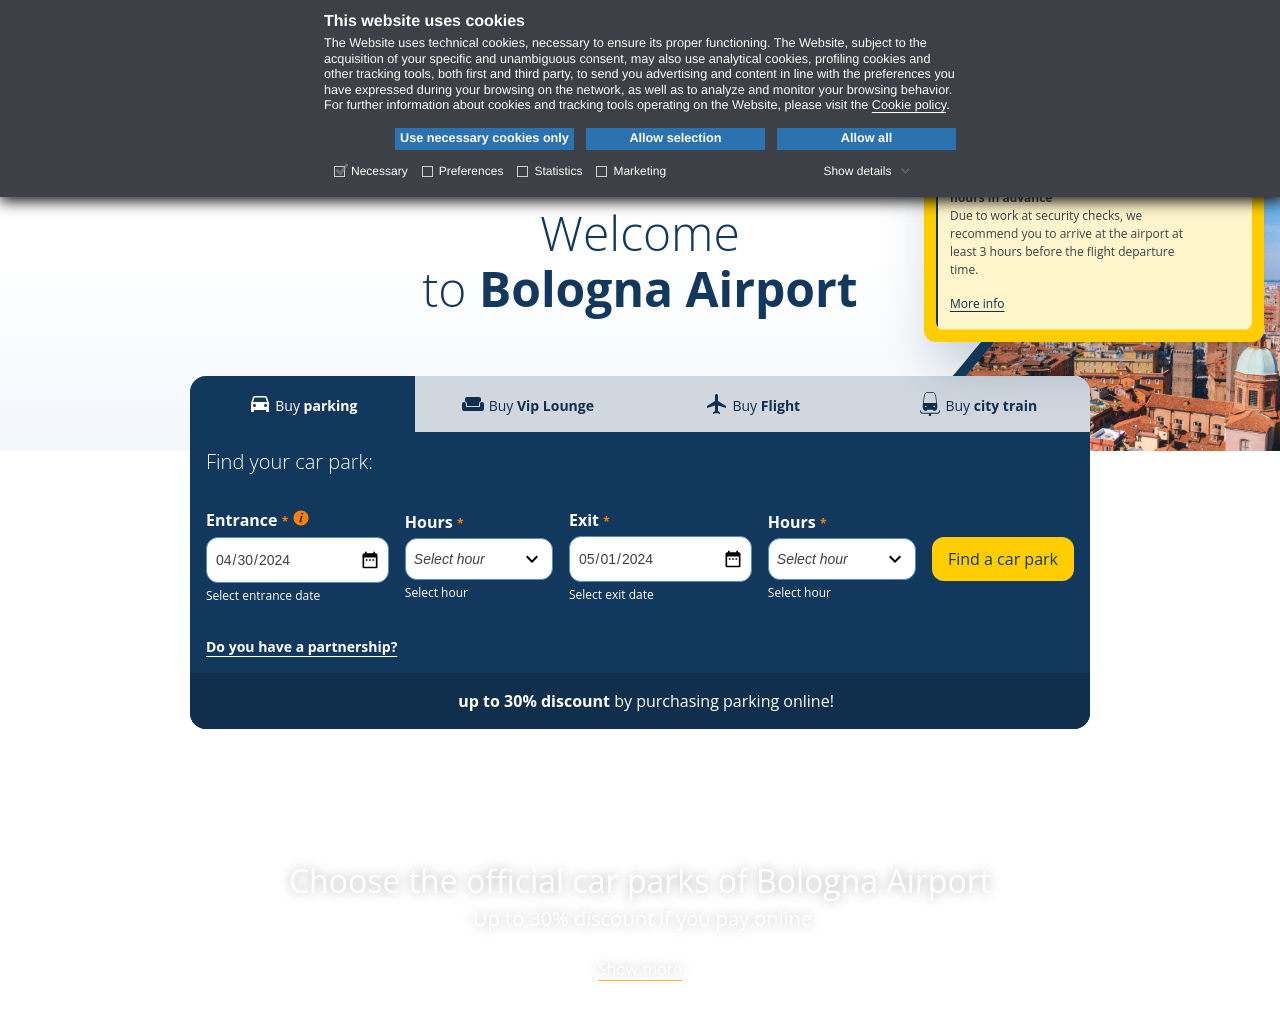 bologna-airport.it